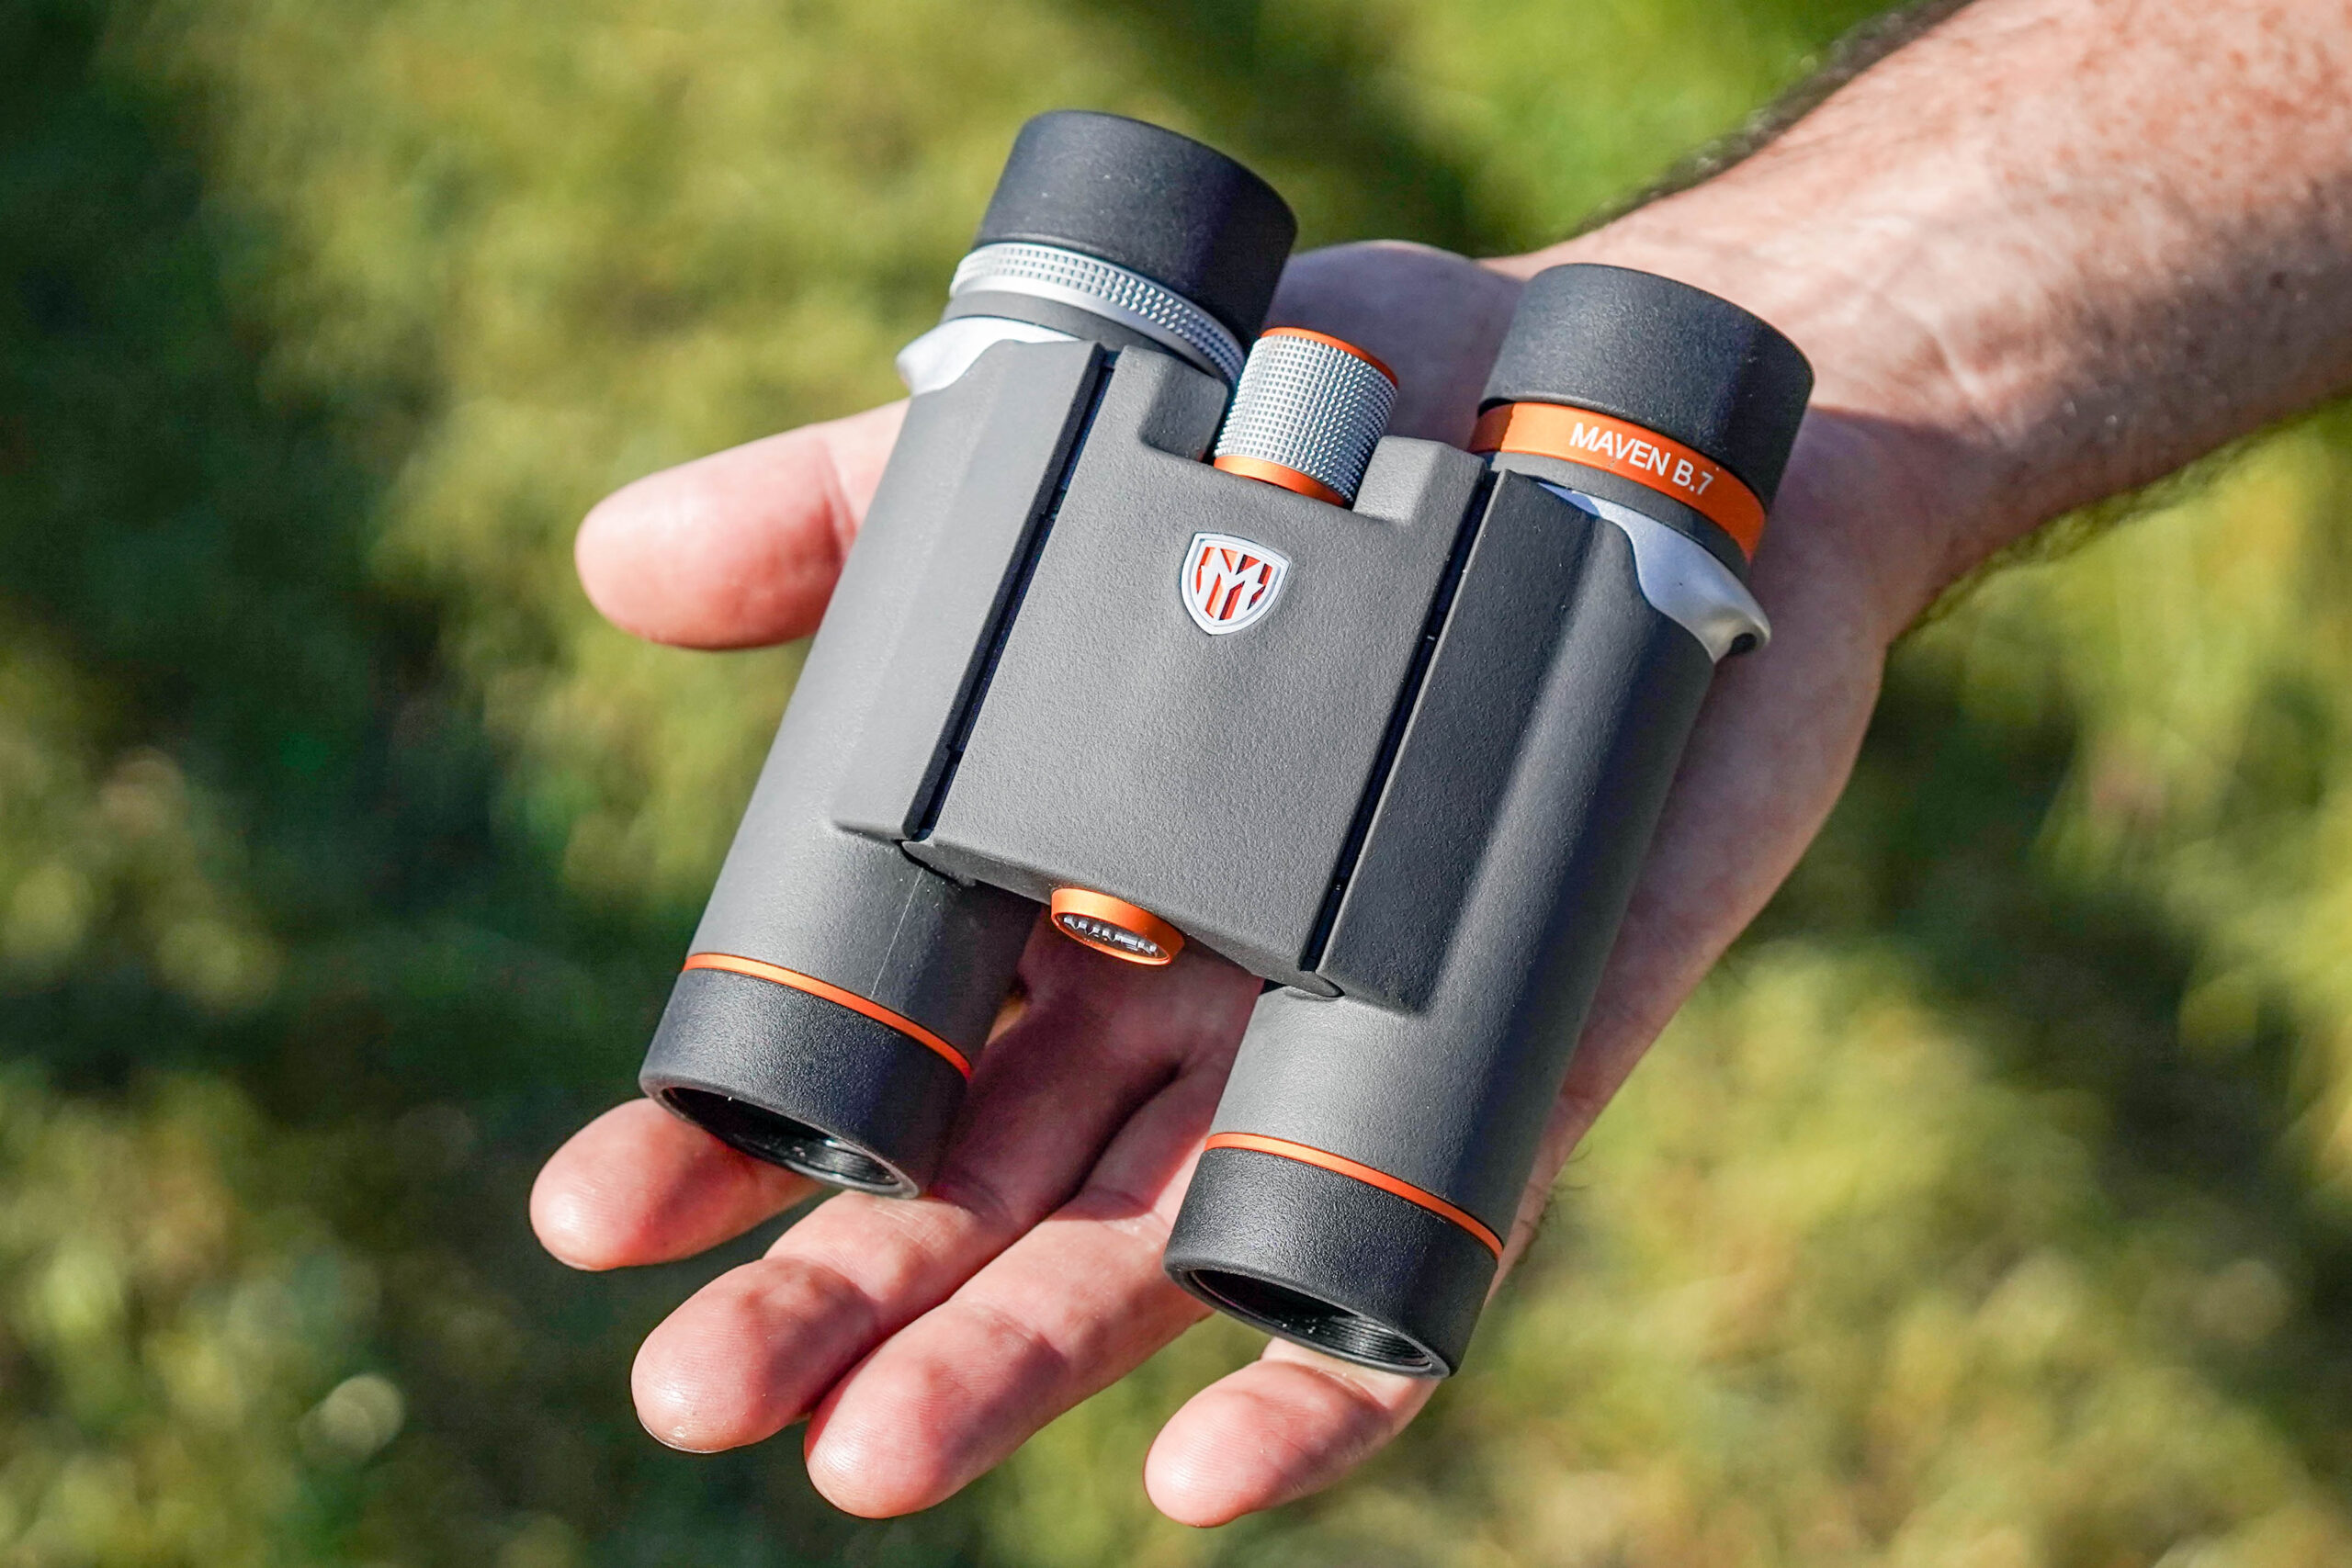 Maven B.7 compact hunting binoculars.